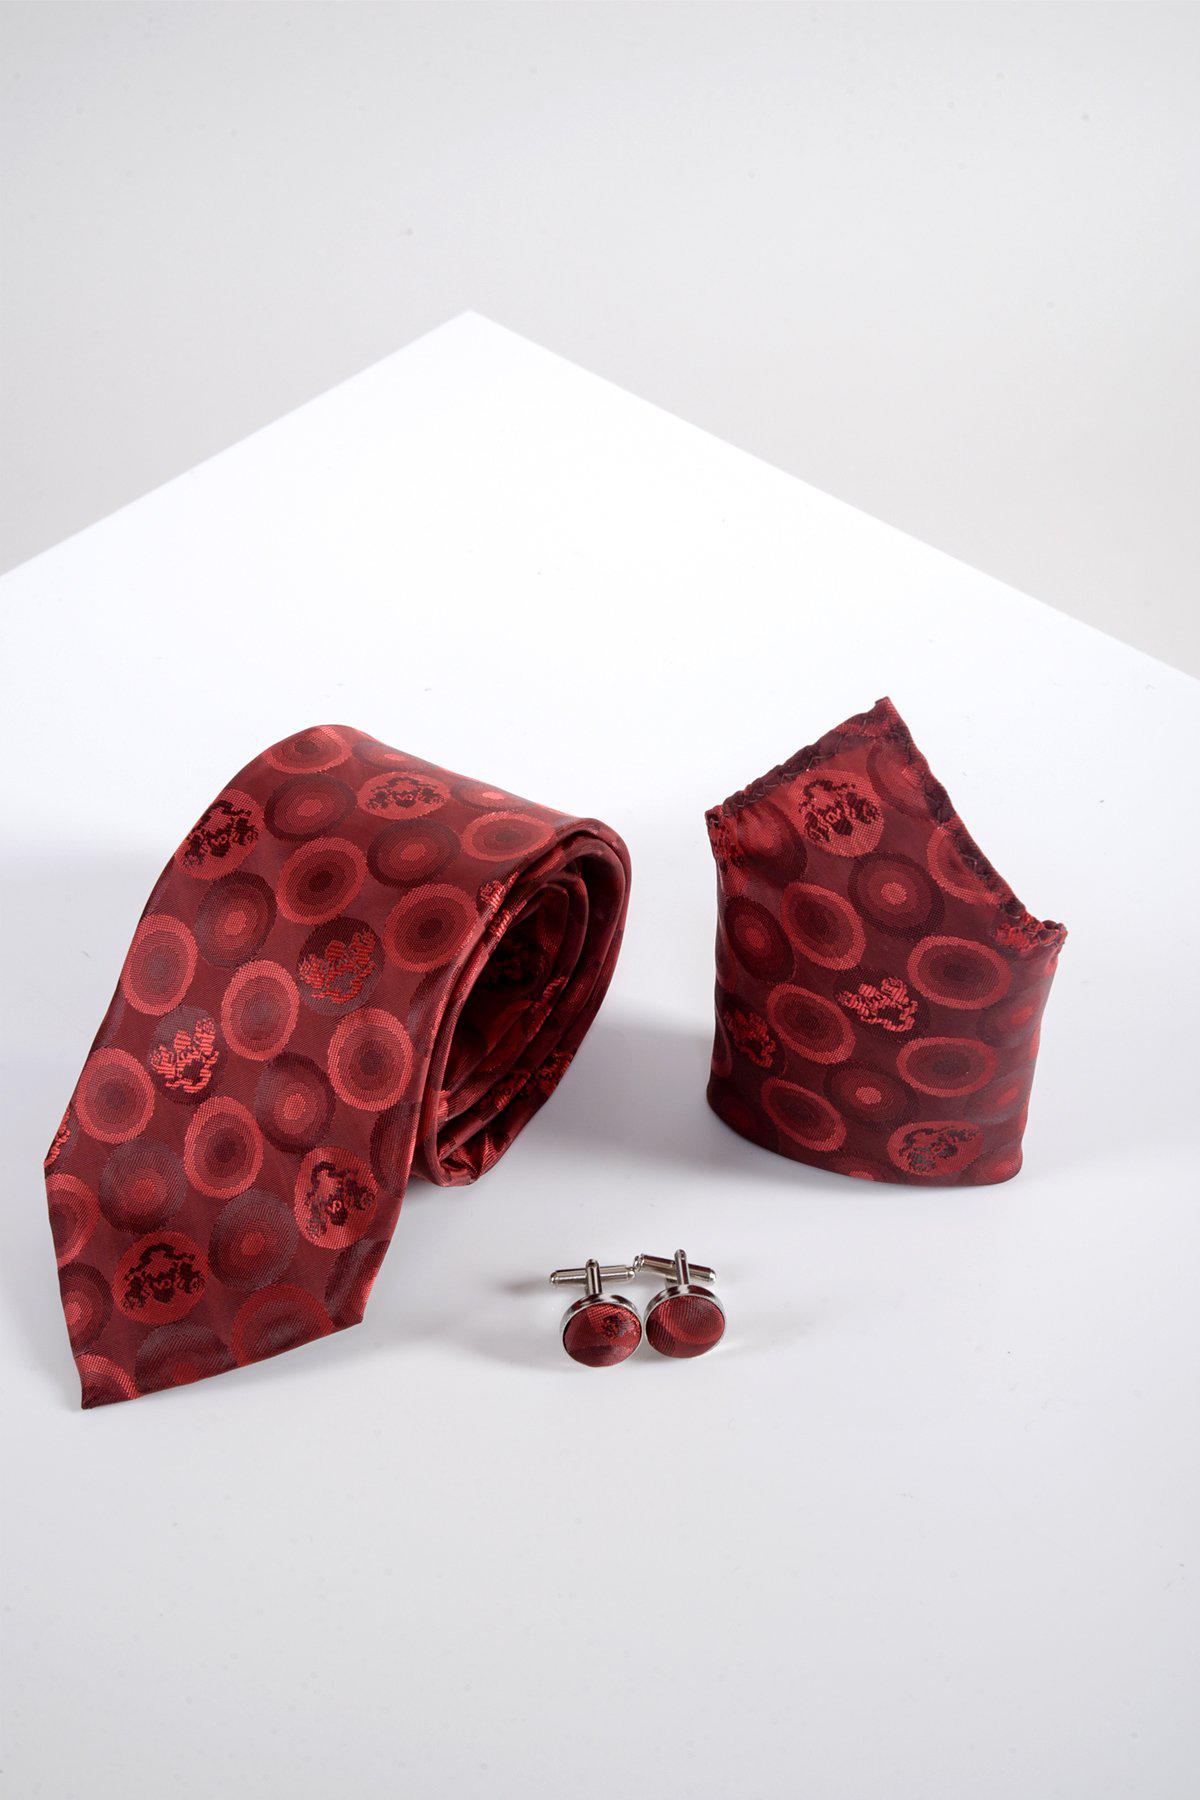 BUBBLES - Wine Bubble Circle Print Tie, Cufflink and Pocket Square Set